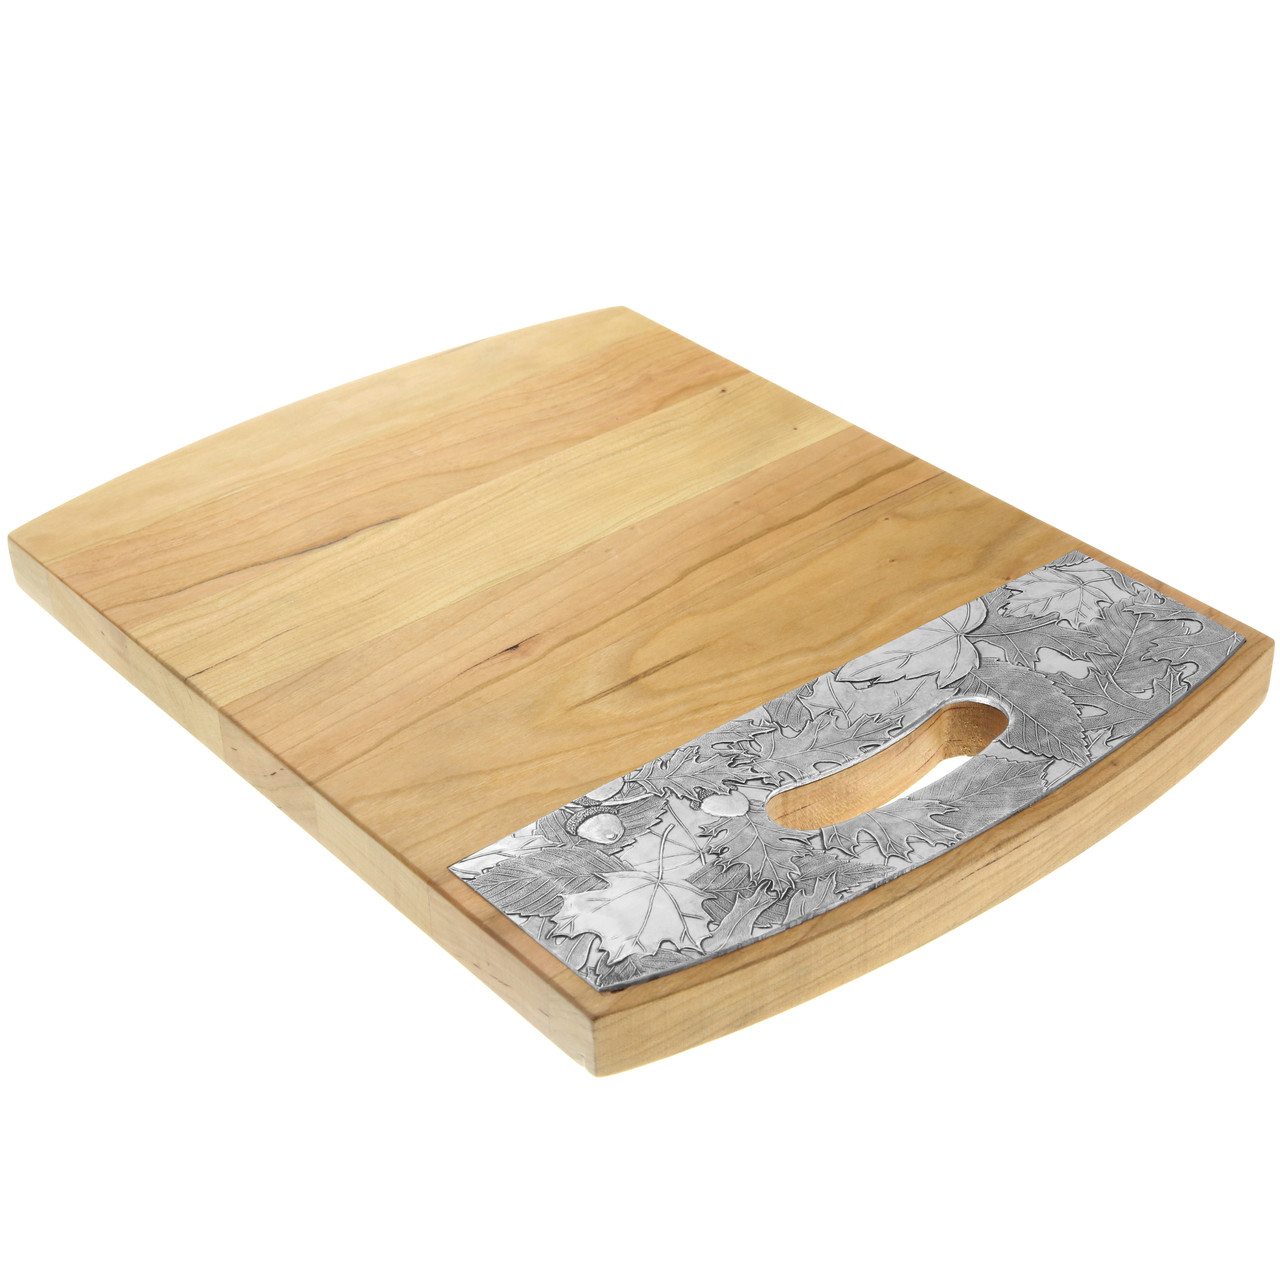 Personalized Chopping Board for Mom, Mom Rock Cutting Board